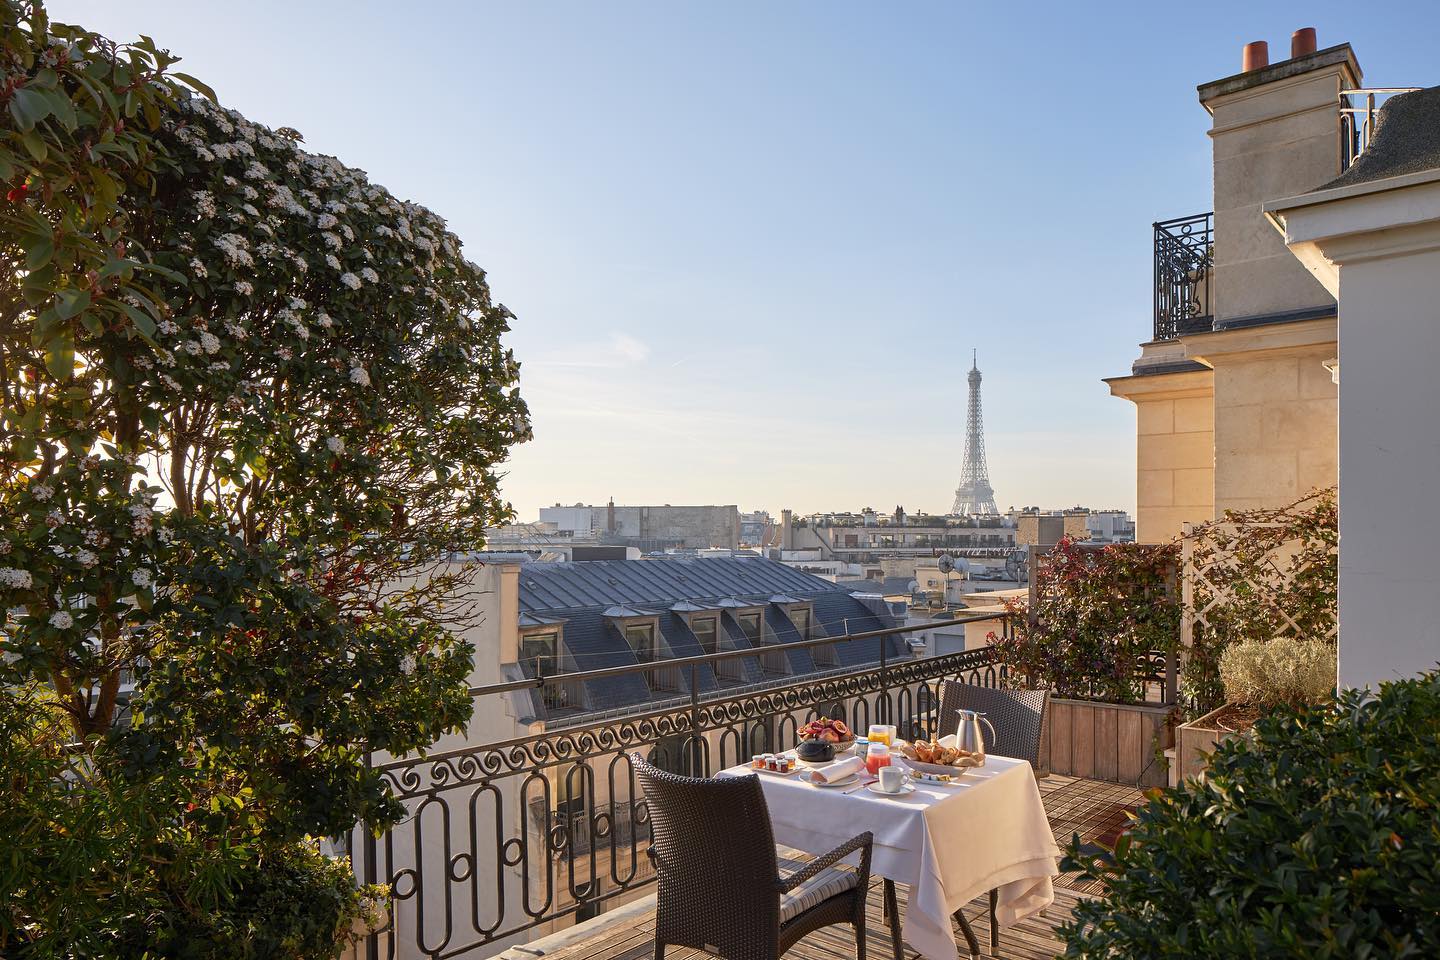 La Terrasse Rooftop Hotel Raphael - a hotel with rooftop bars in Paris near Eiffel Tower